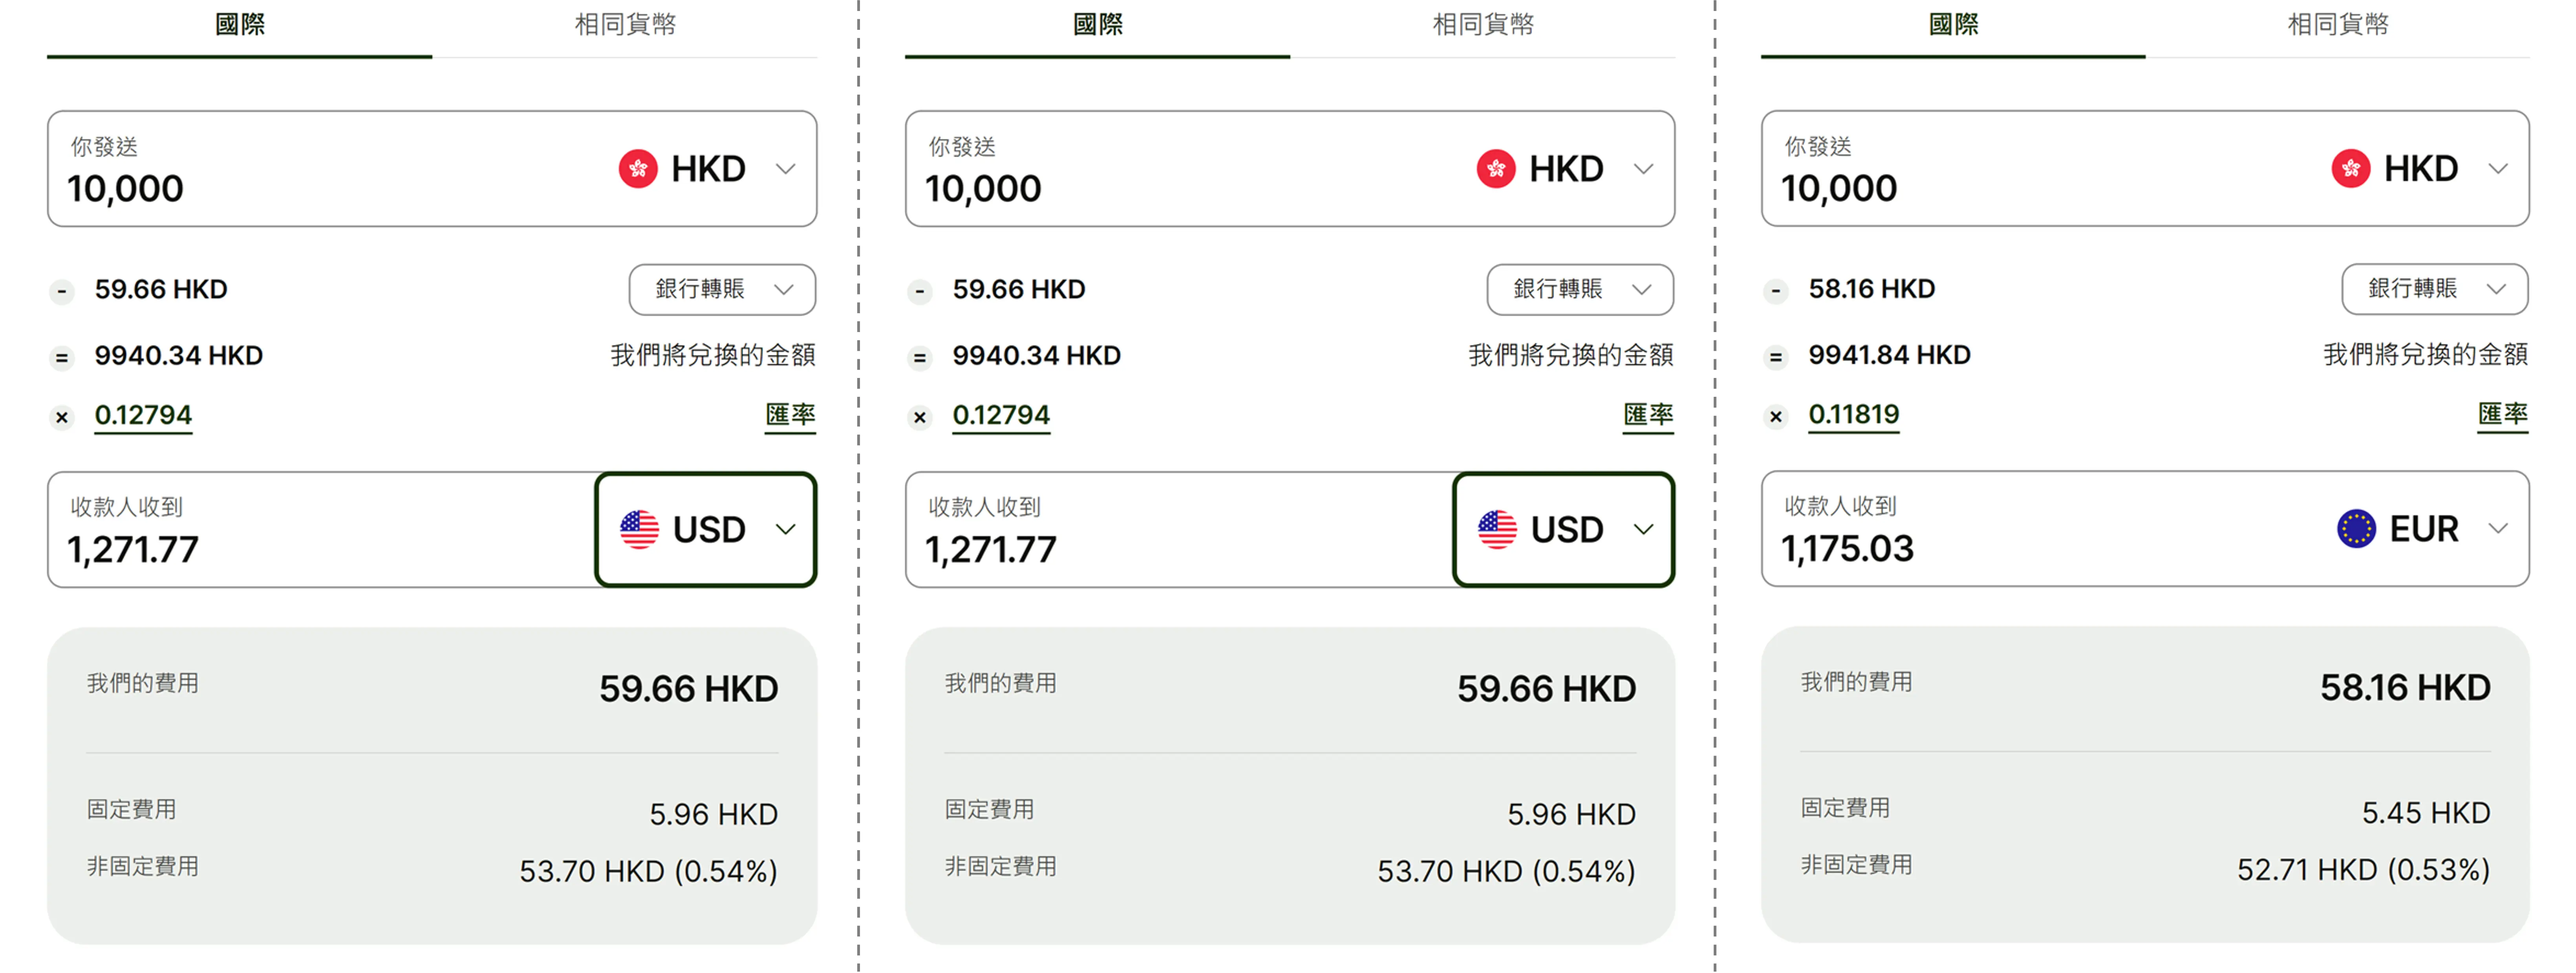 Fees while sending from HKD